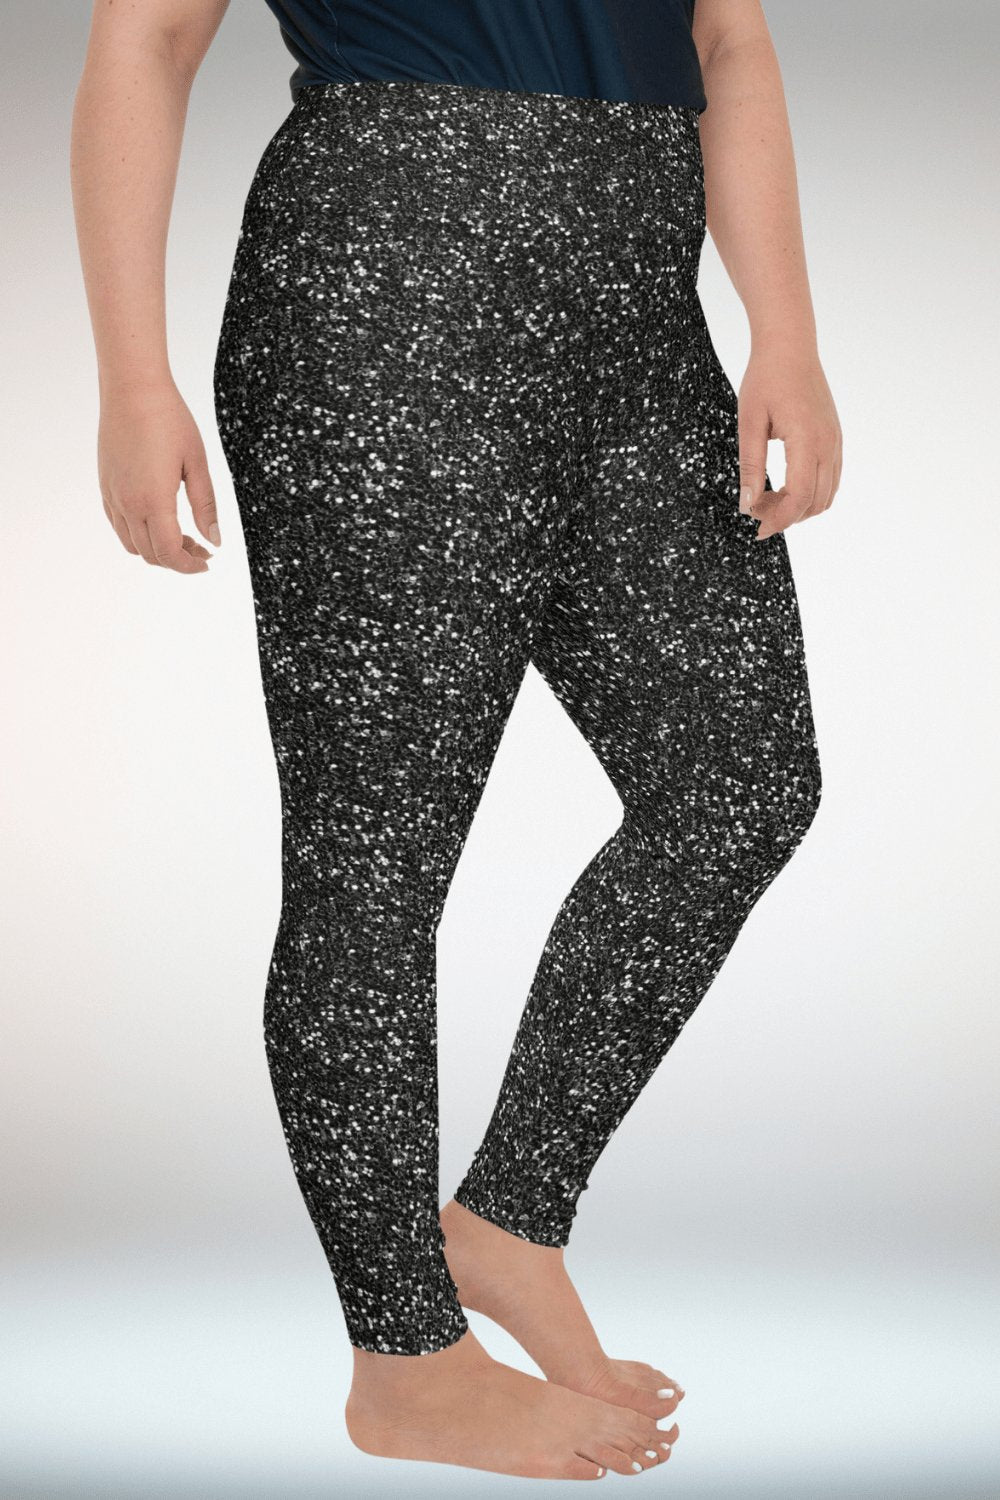 Black Glitter Print Plus Size Leggings - TGC Boutique - Leggings